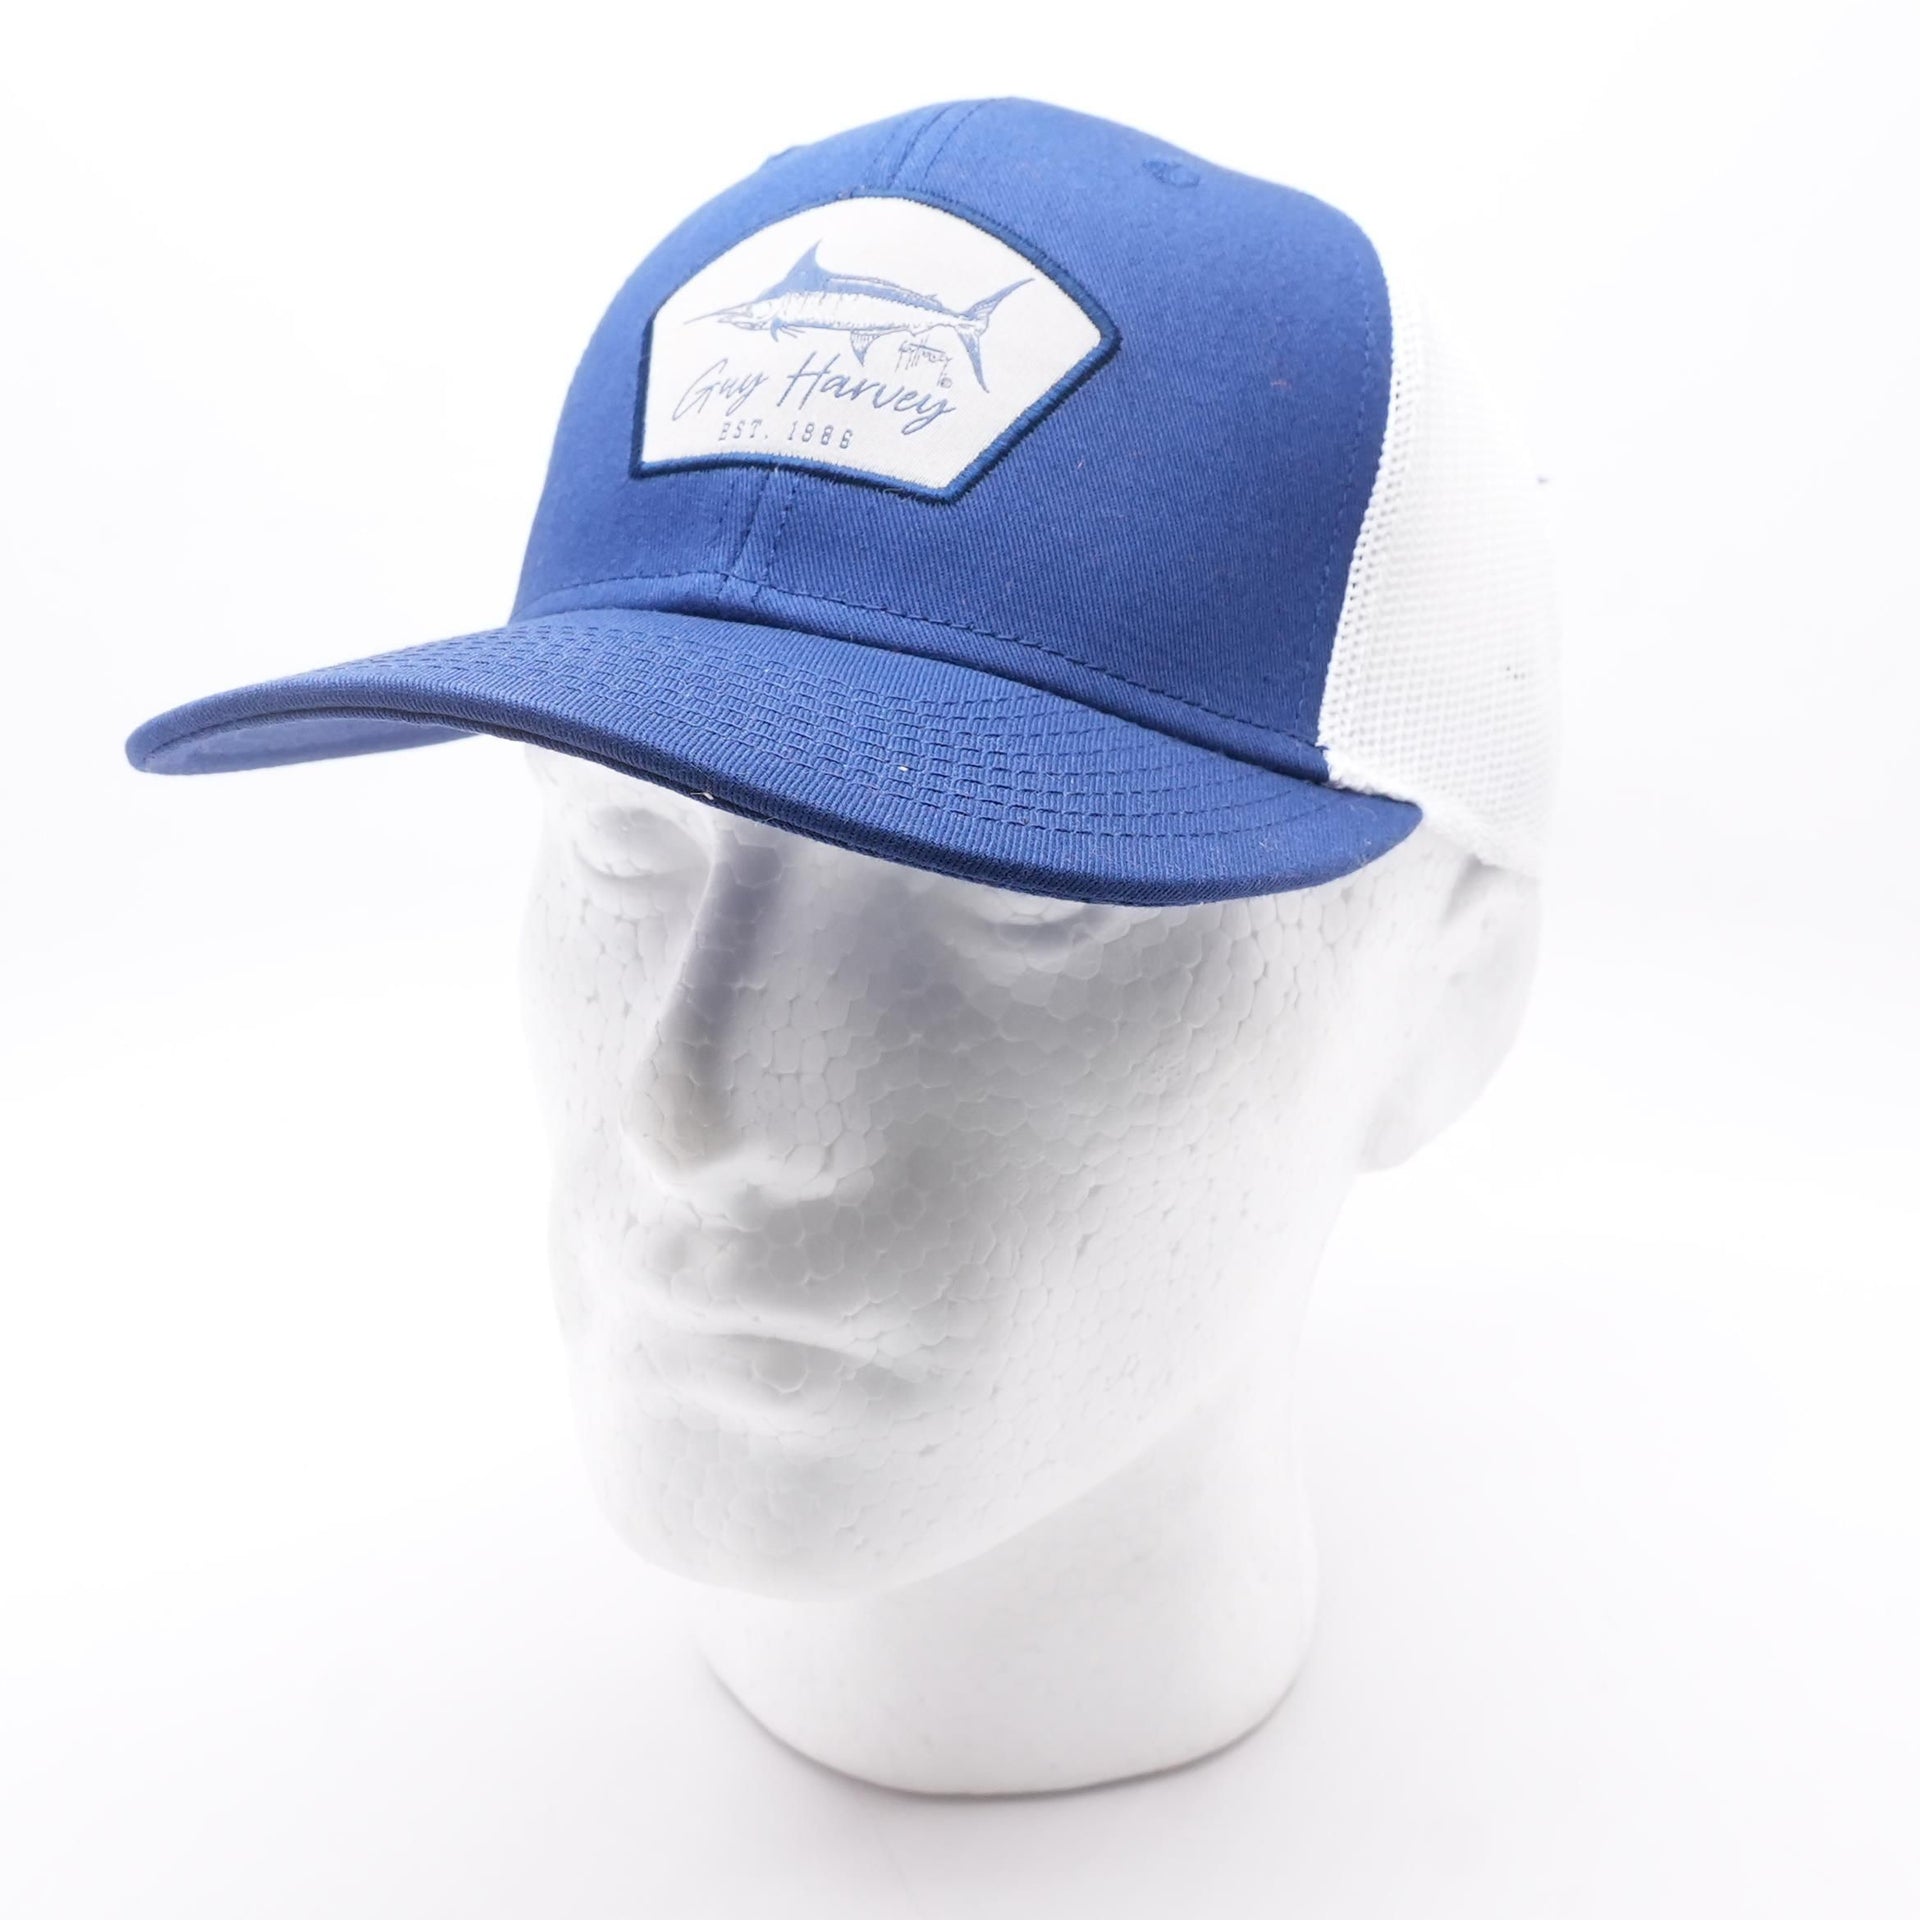 Guy Harvey Men's Cali Vibes Snapback Trucker Hat - Estate Blue - Size